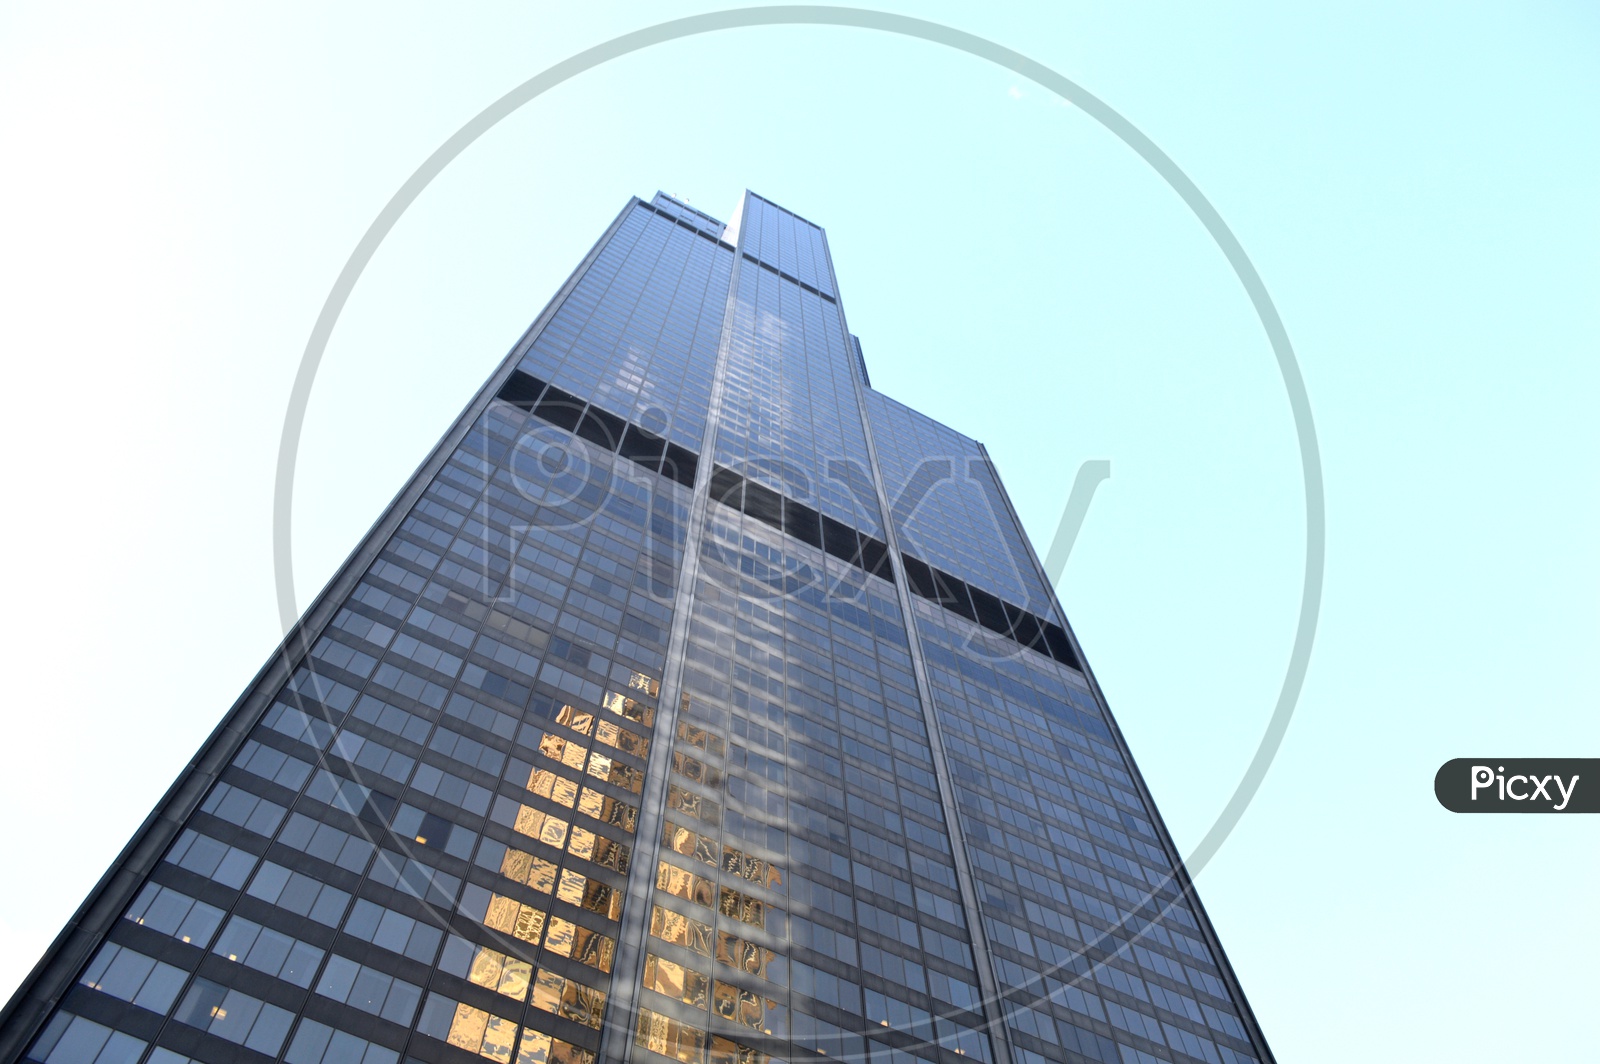 Willis Tower  A  Sky Scraper in Chicago